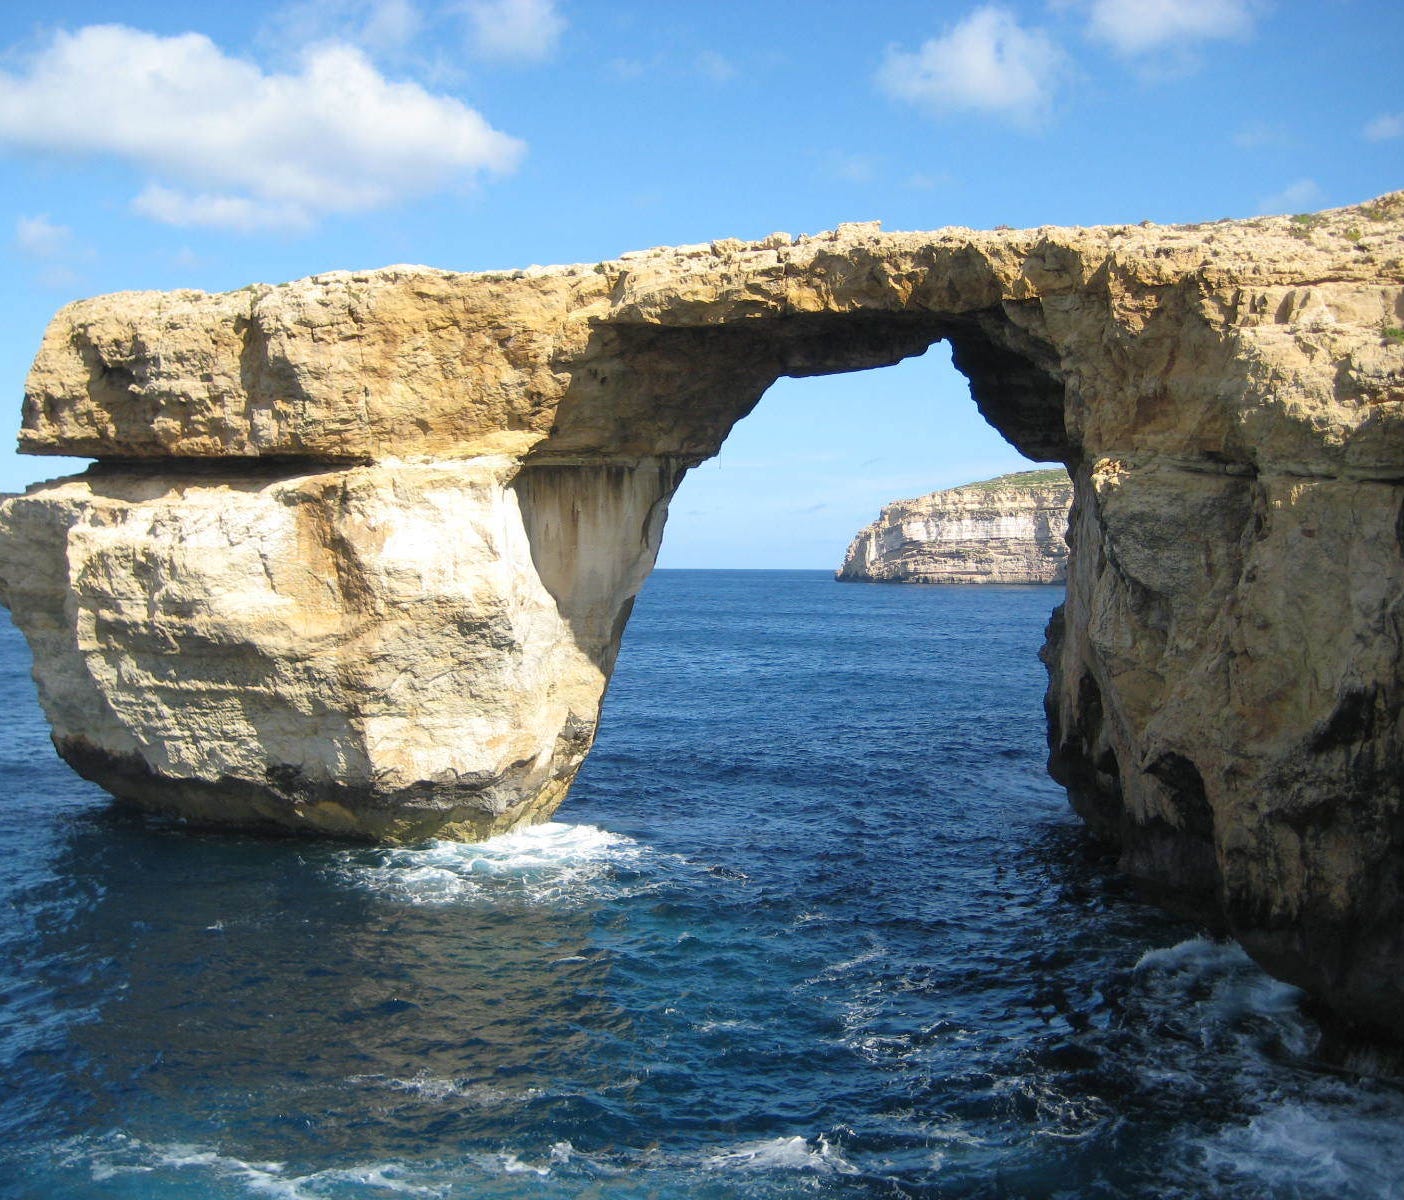 The Azure Window located just off Malta.